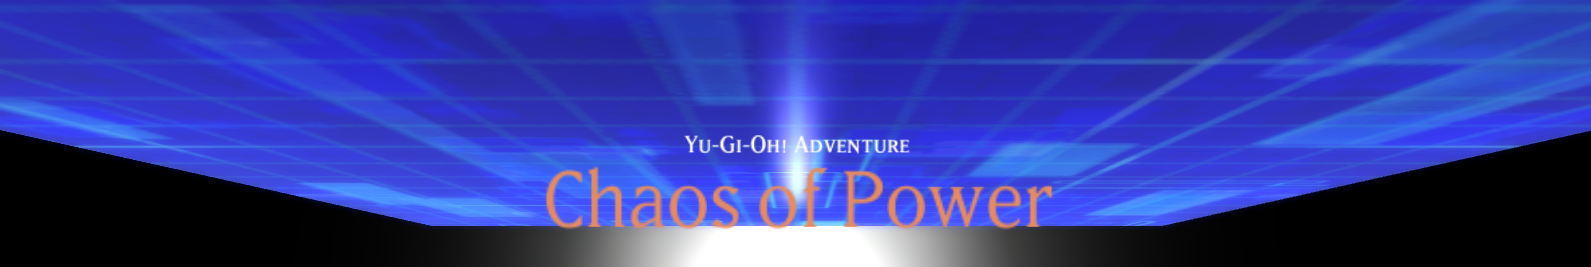 Yu-Gi-Oh! Chaos of Power (prototype)